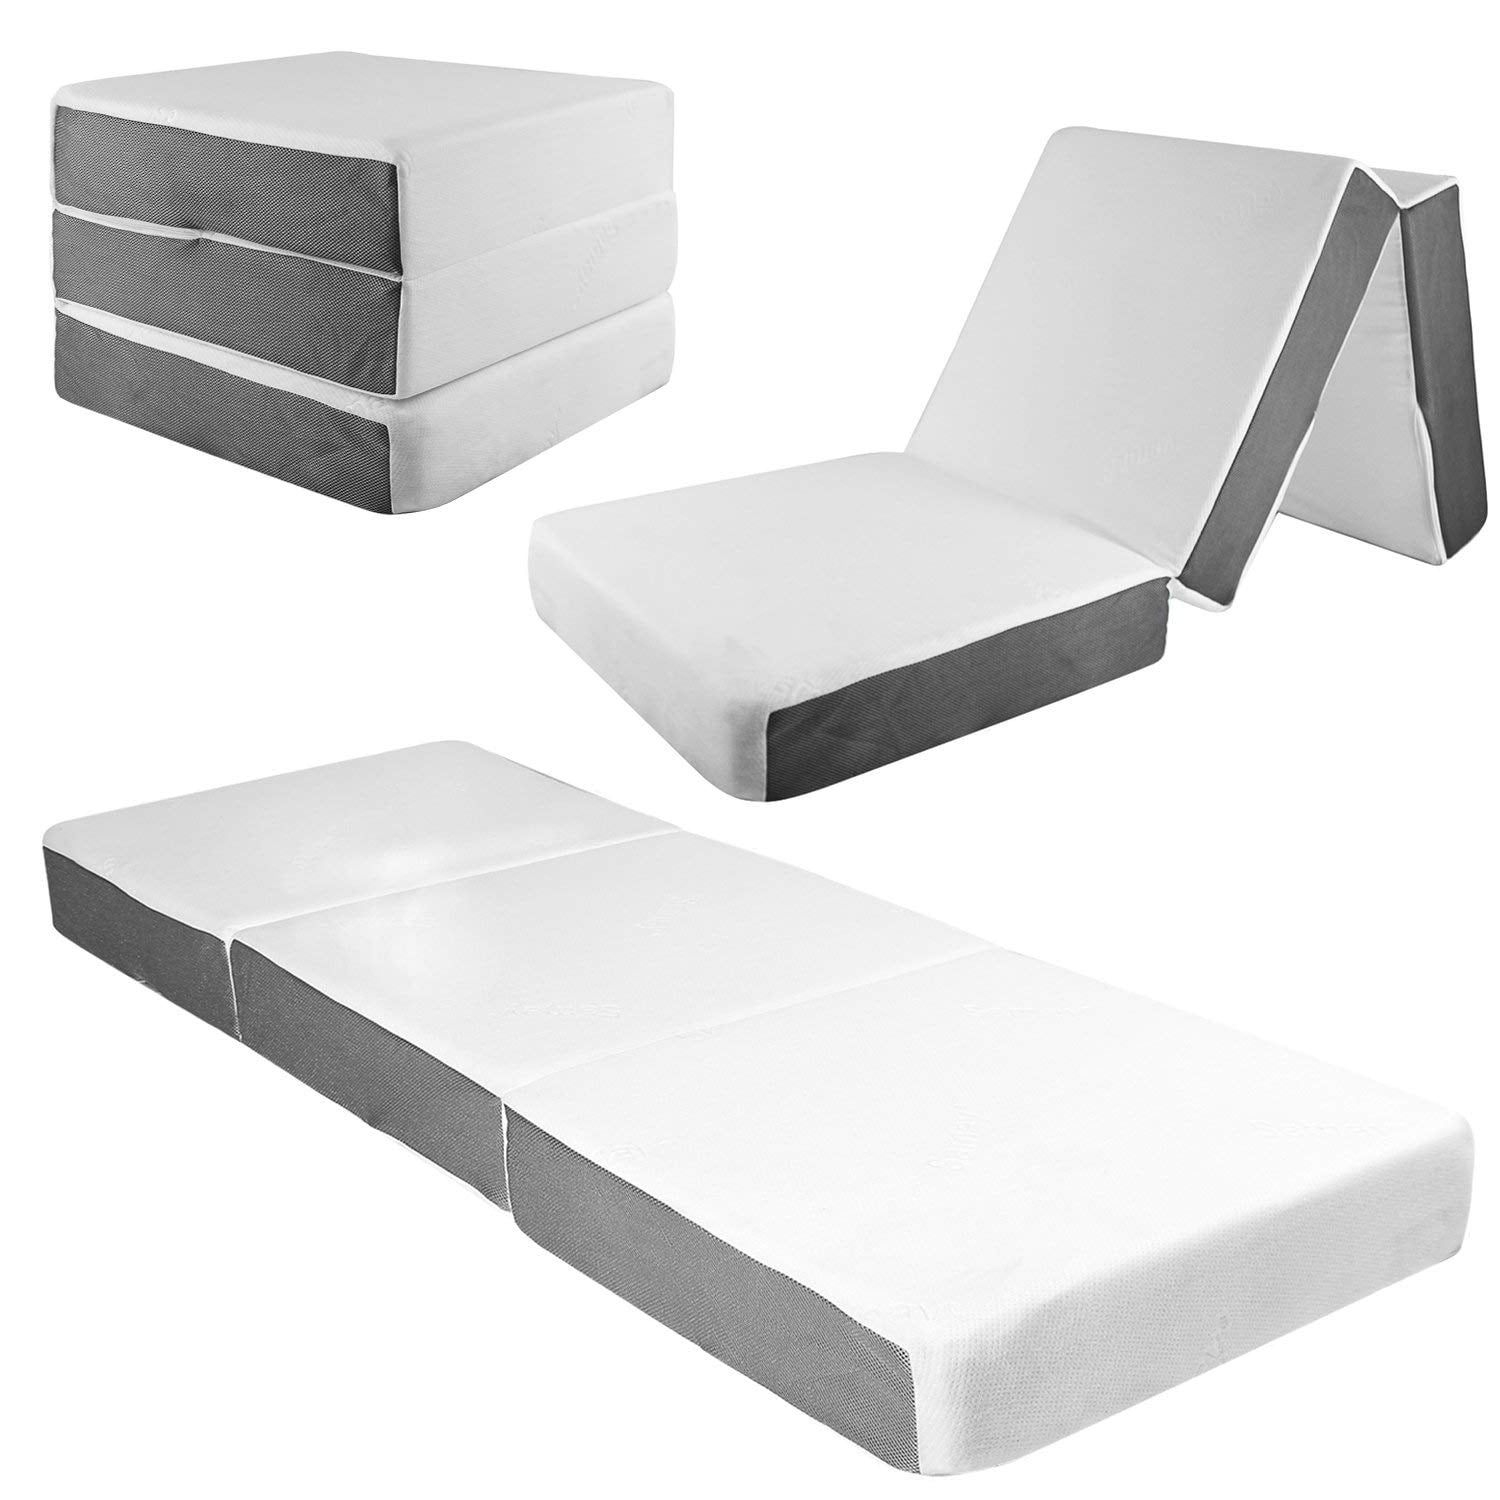 4 Tri Folding Memory Foam Mattress Single Bed Guest Bedroom Camping Dorm Beds 